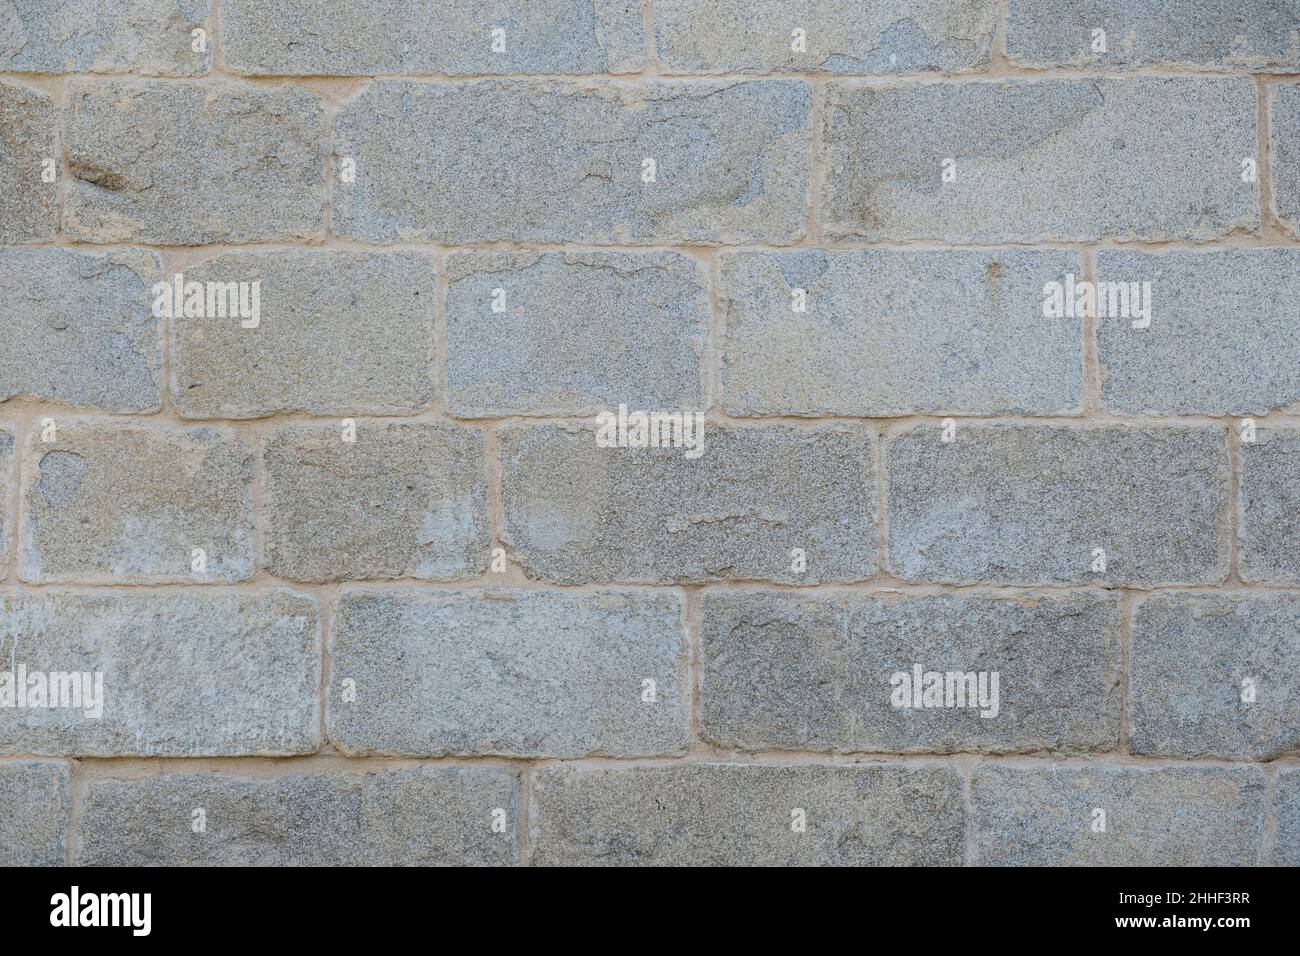 wall backdrop with rectangular stone blocks Stock Photo